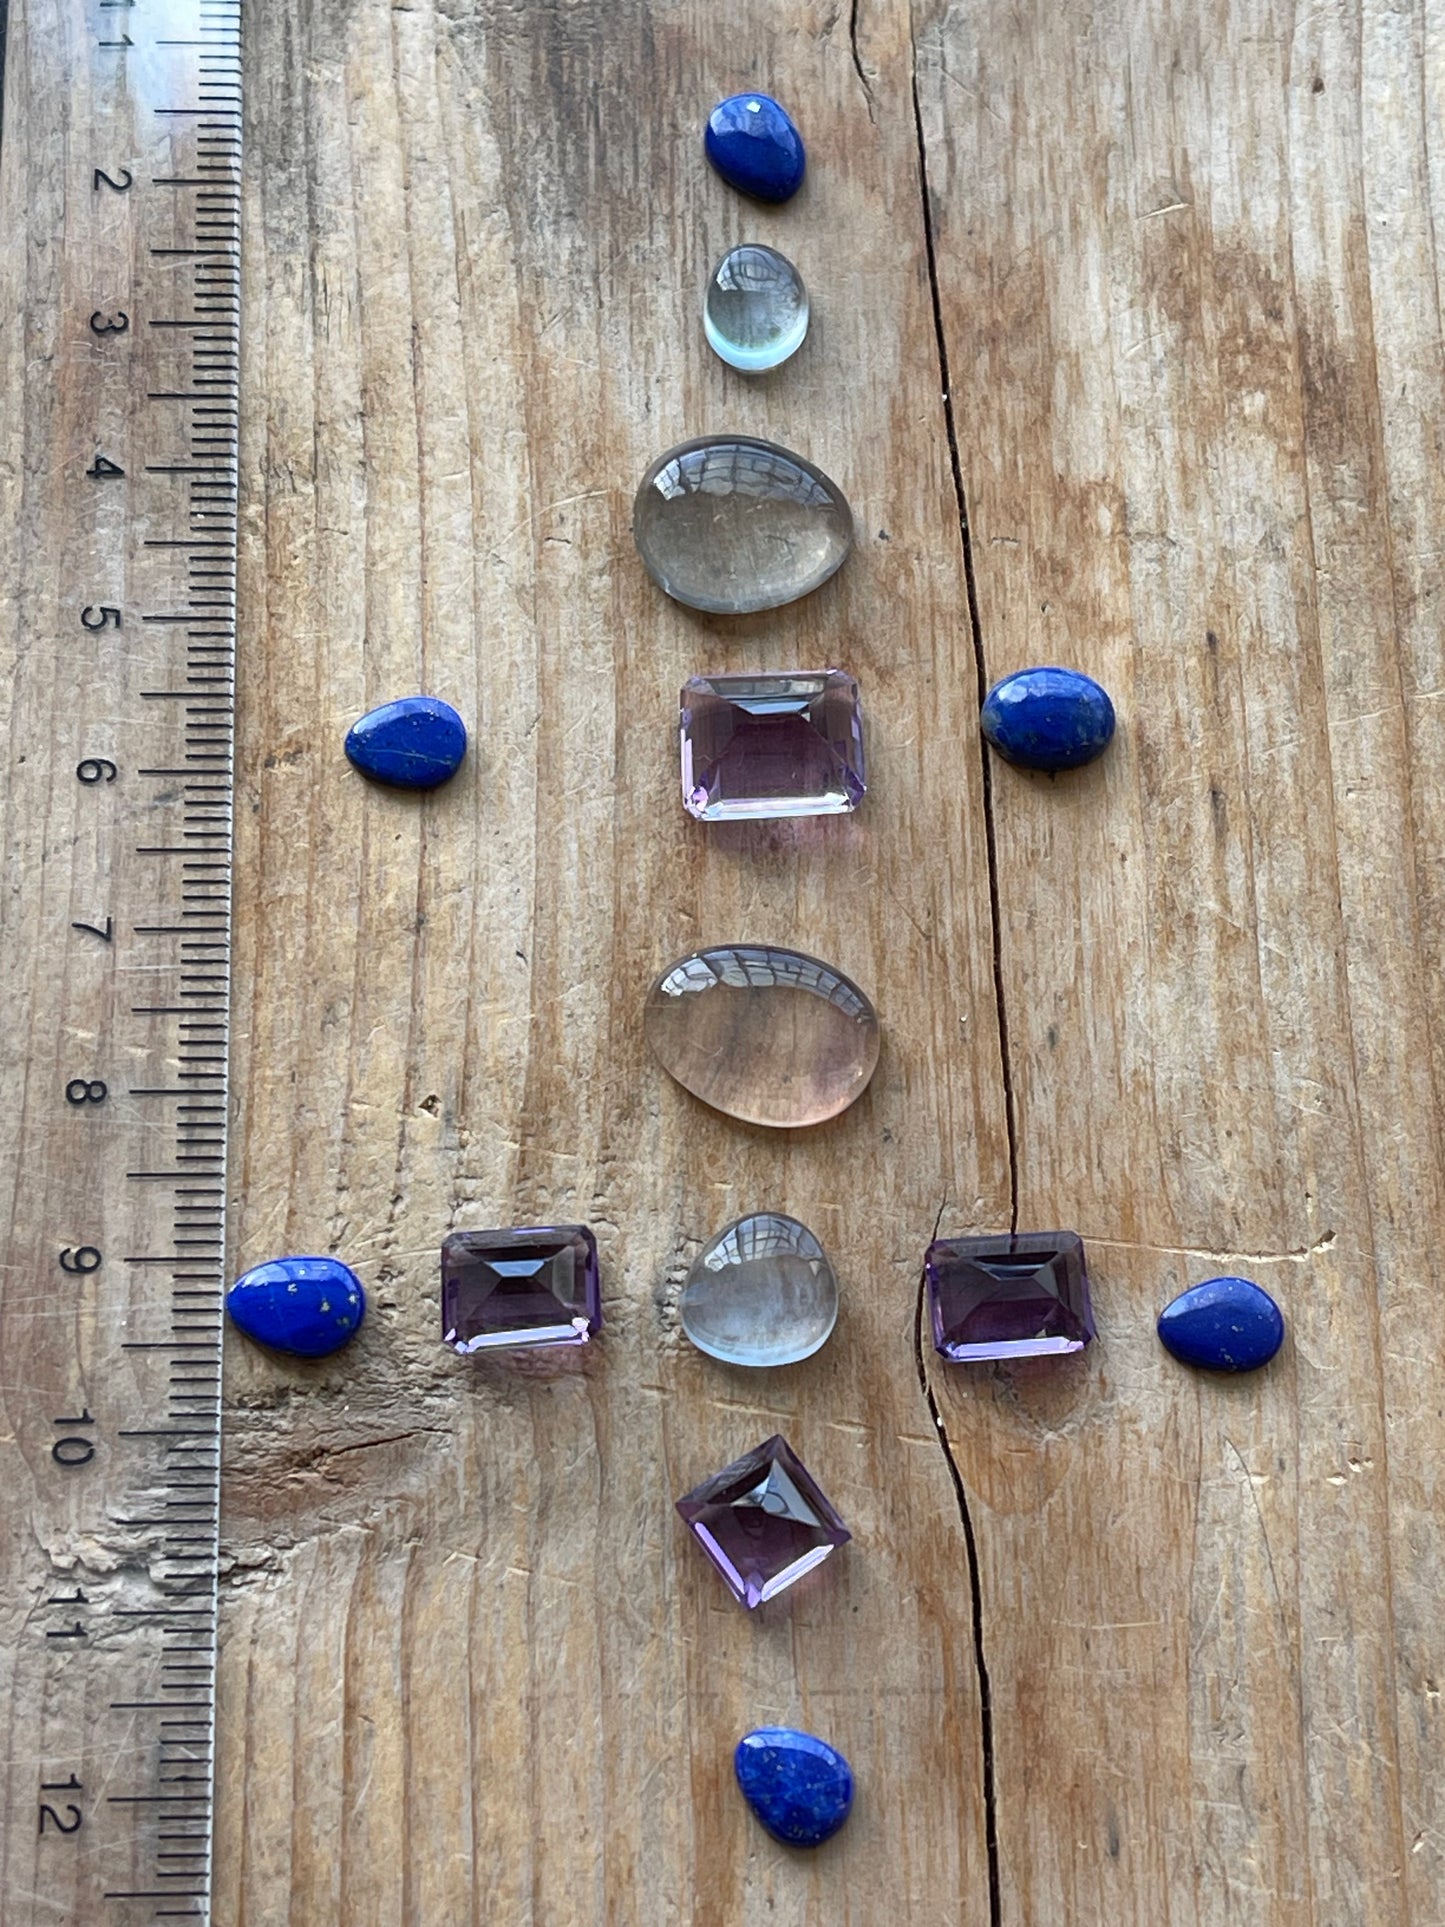 Gemstone Collection 354: Lapis Lazuli, Amethyst, Rainbow Tourmaline, Fluorite - 30ct (G354)